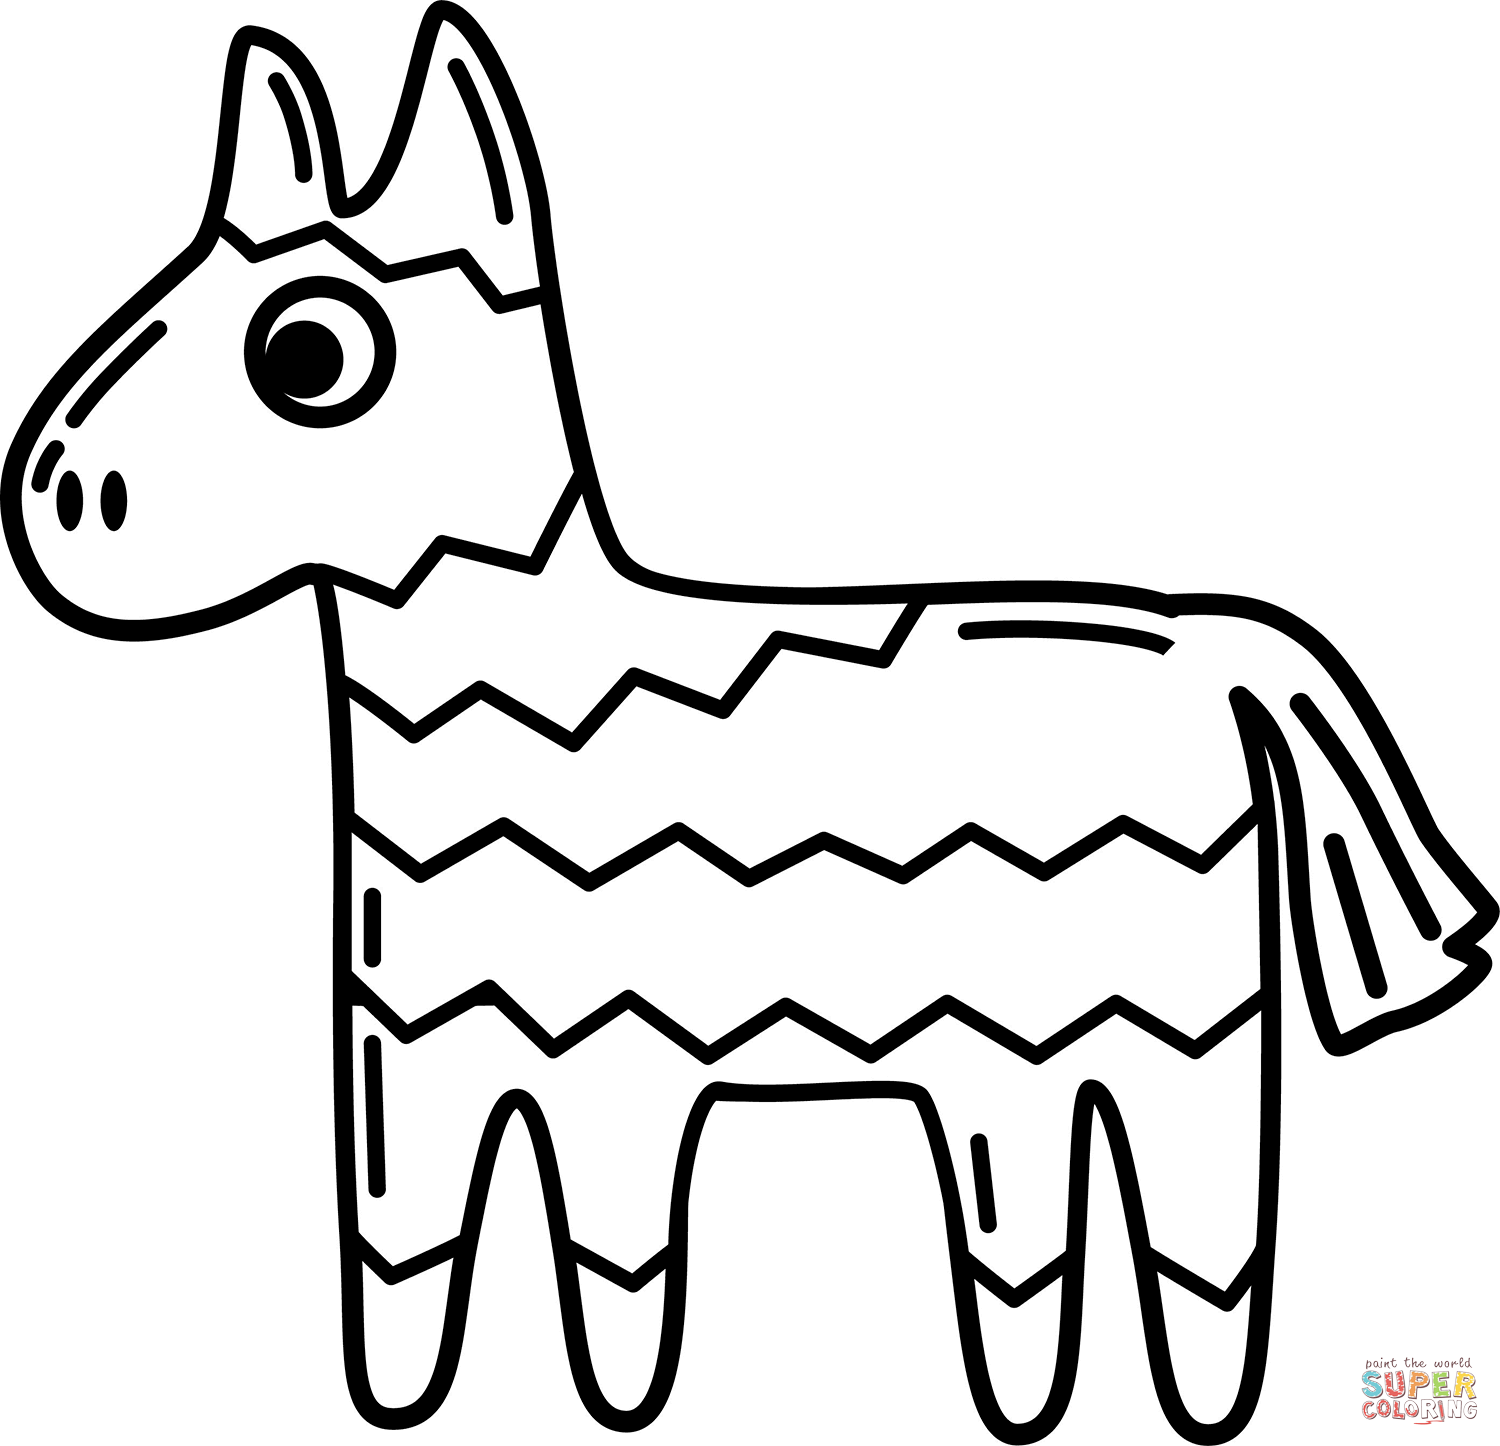 Donkey pinata coloring page free printable coloring pages